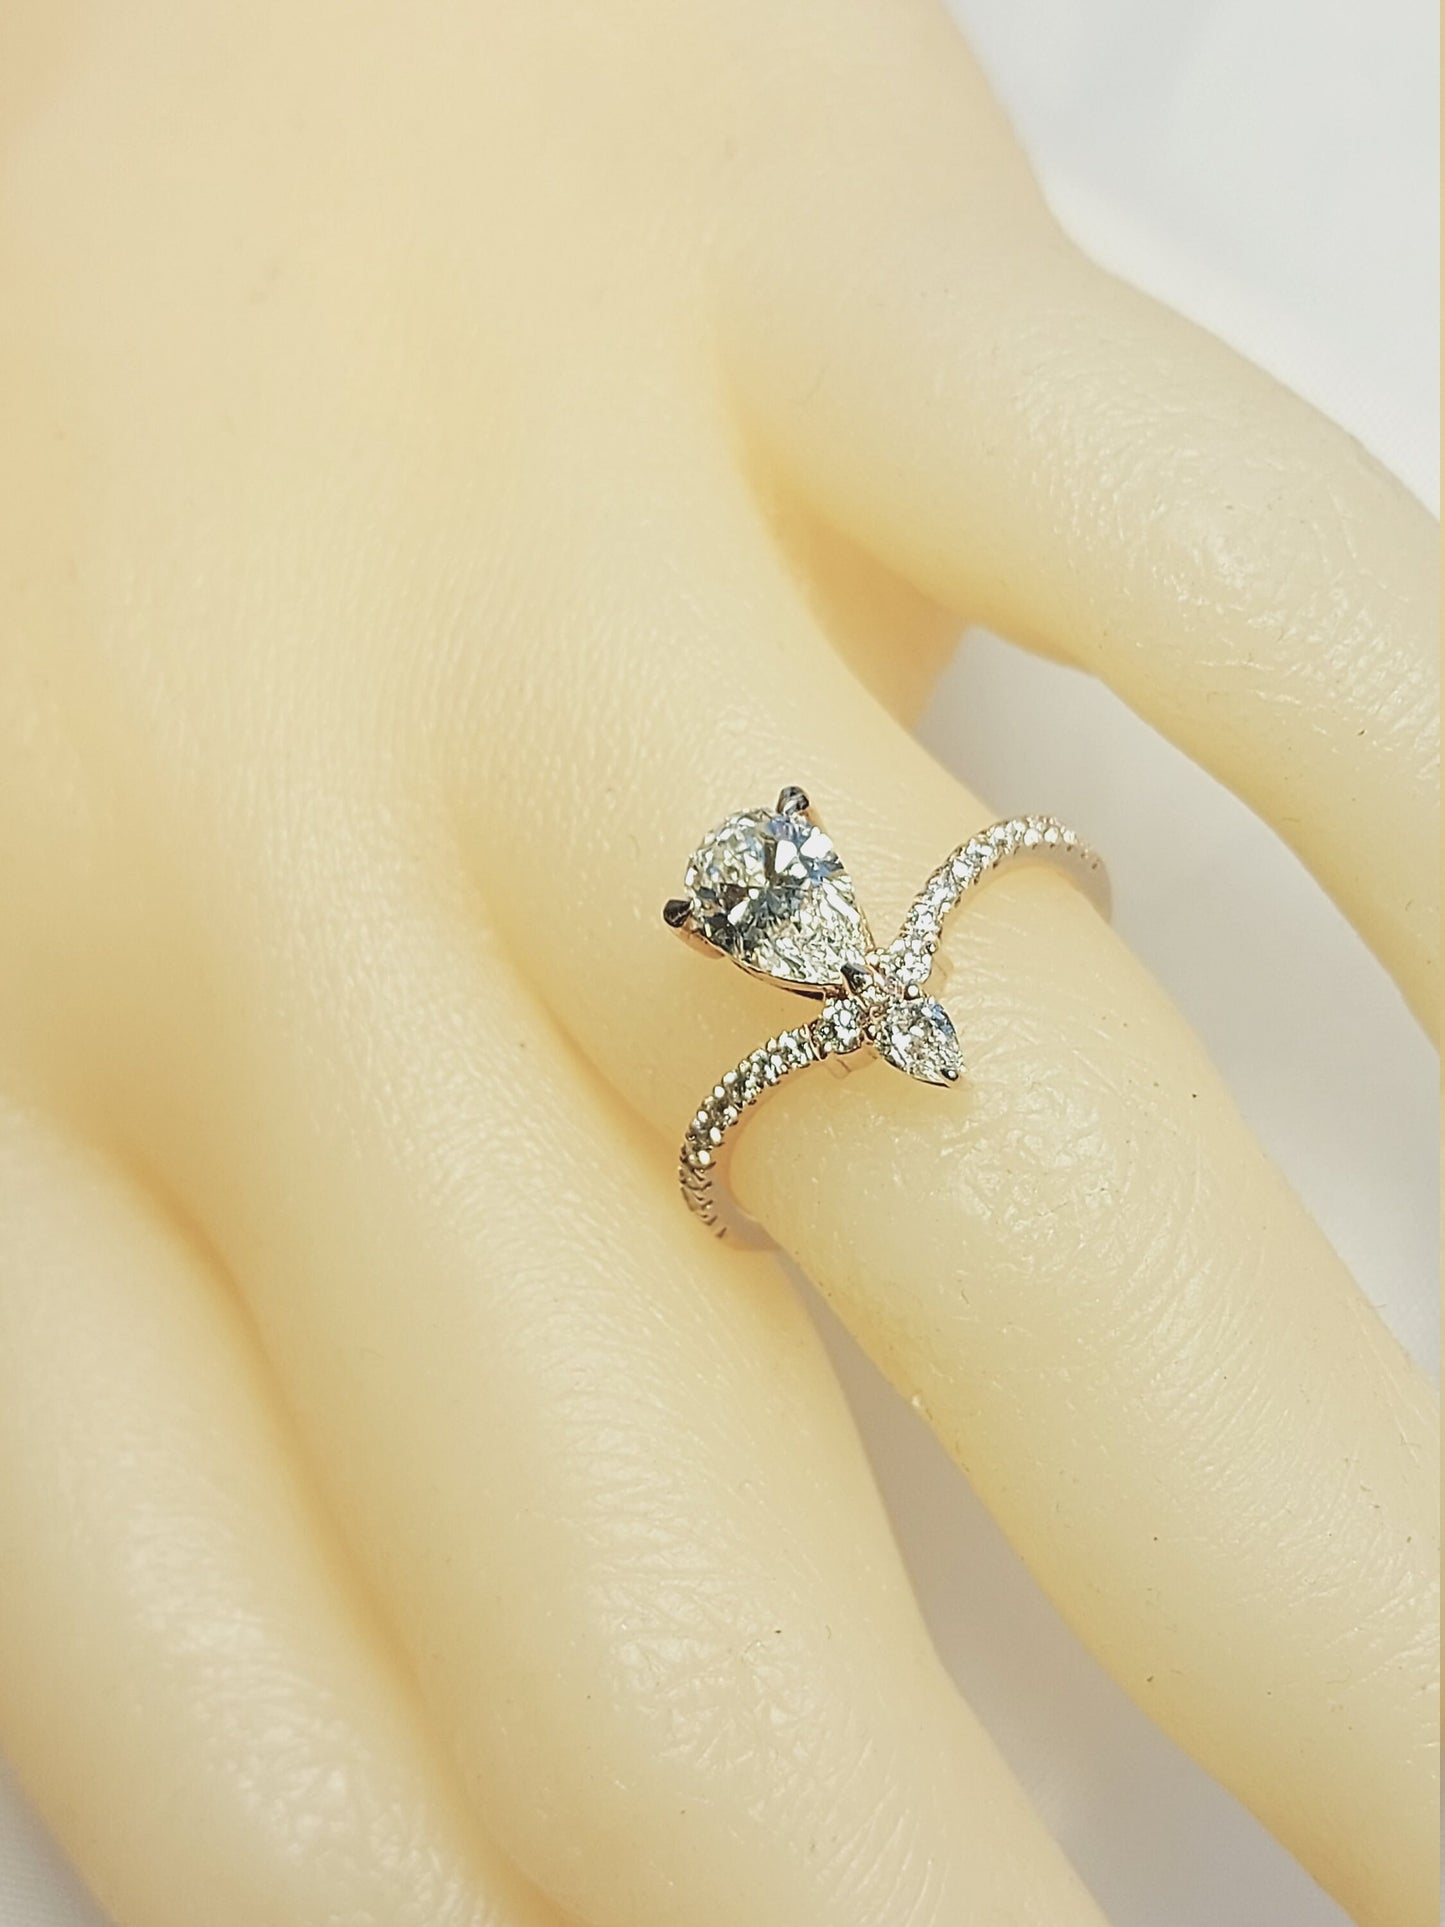 IGI Certified diamond pear shaped engagement ring,O.8ct Vintage lab grown pear diamond ring, lab created diamond ring, pear engagement ring.